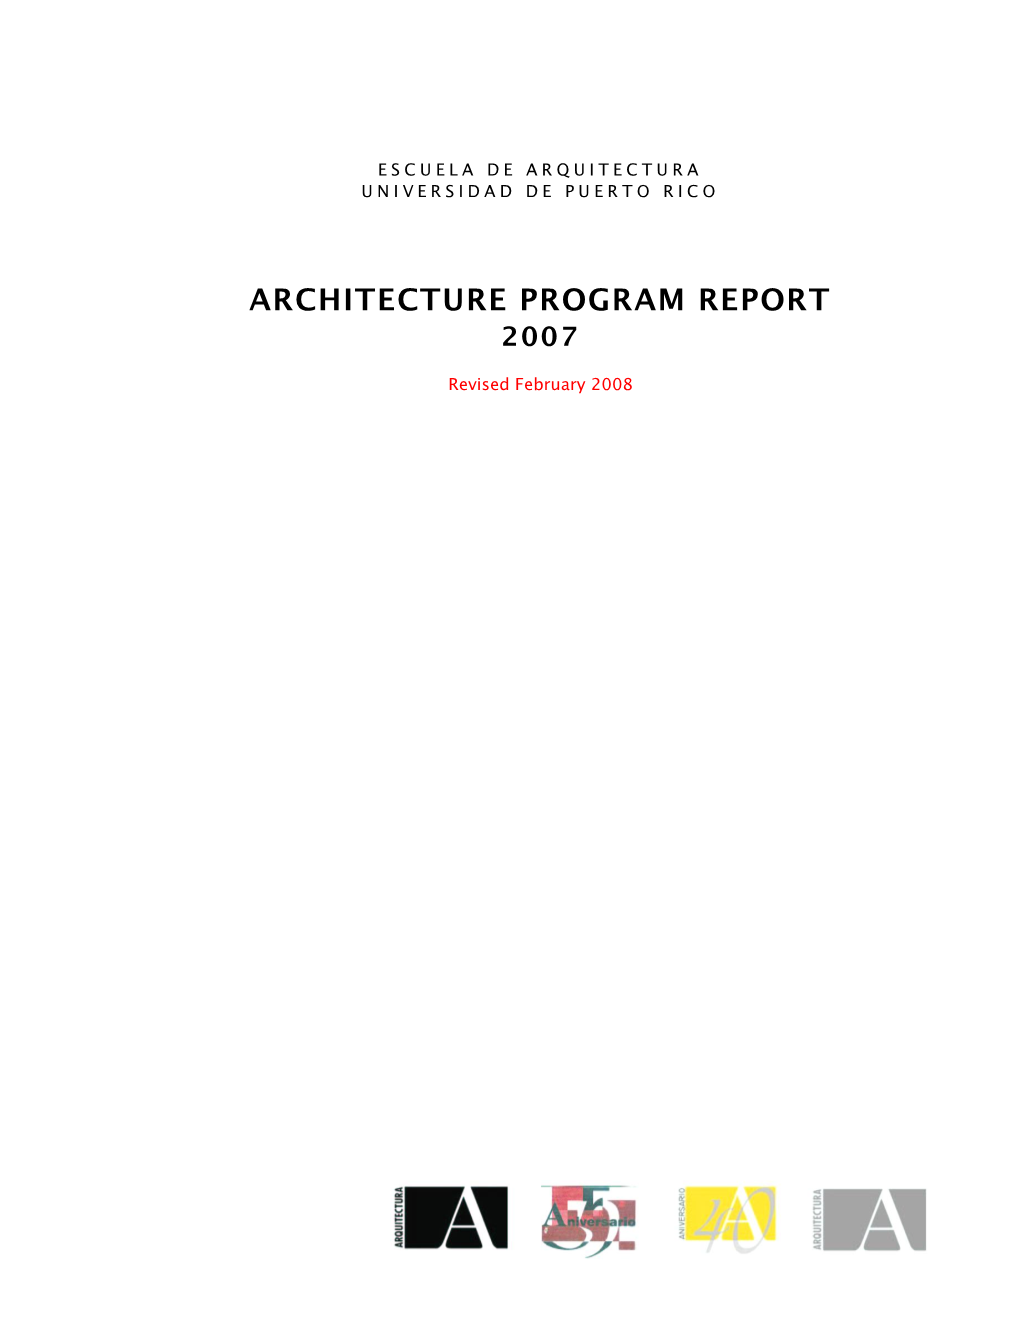 Architectural Program Report 2007